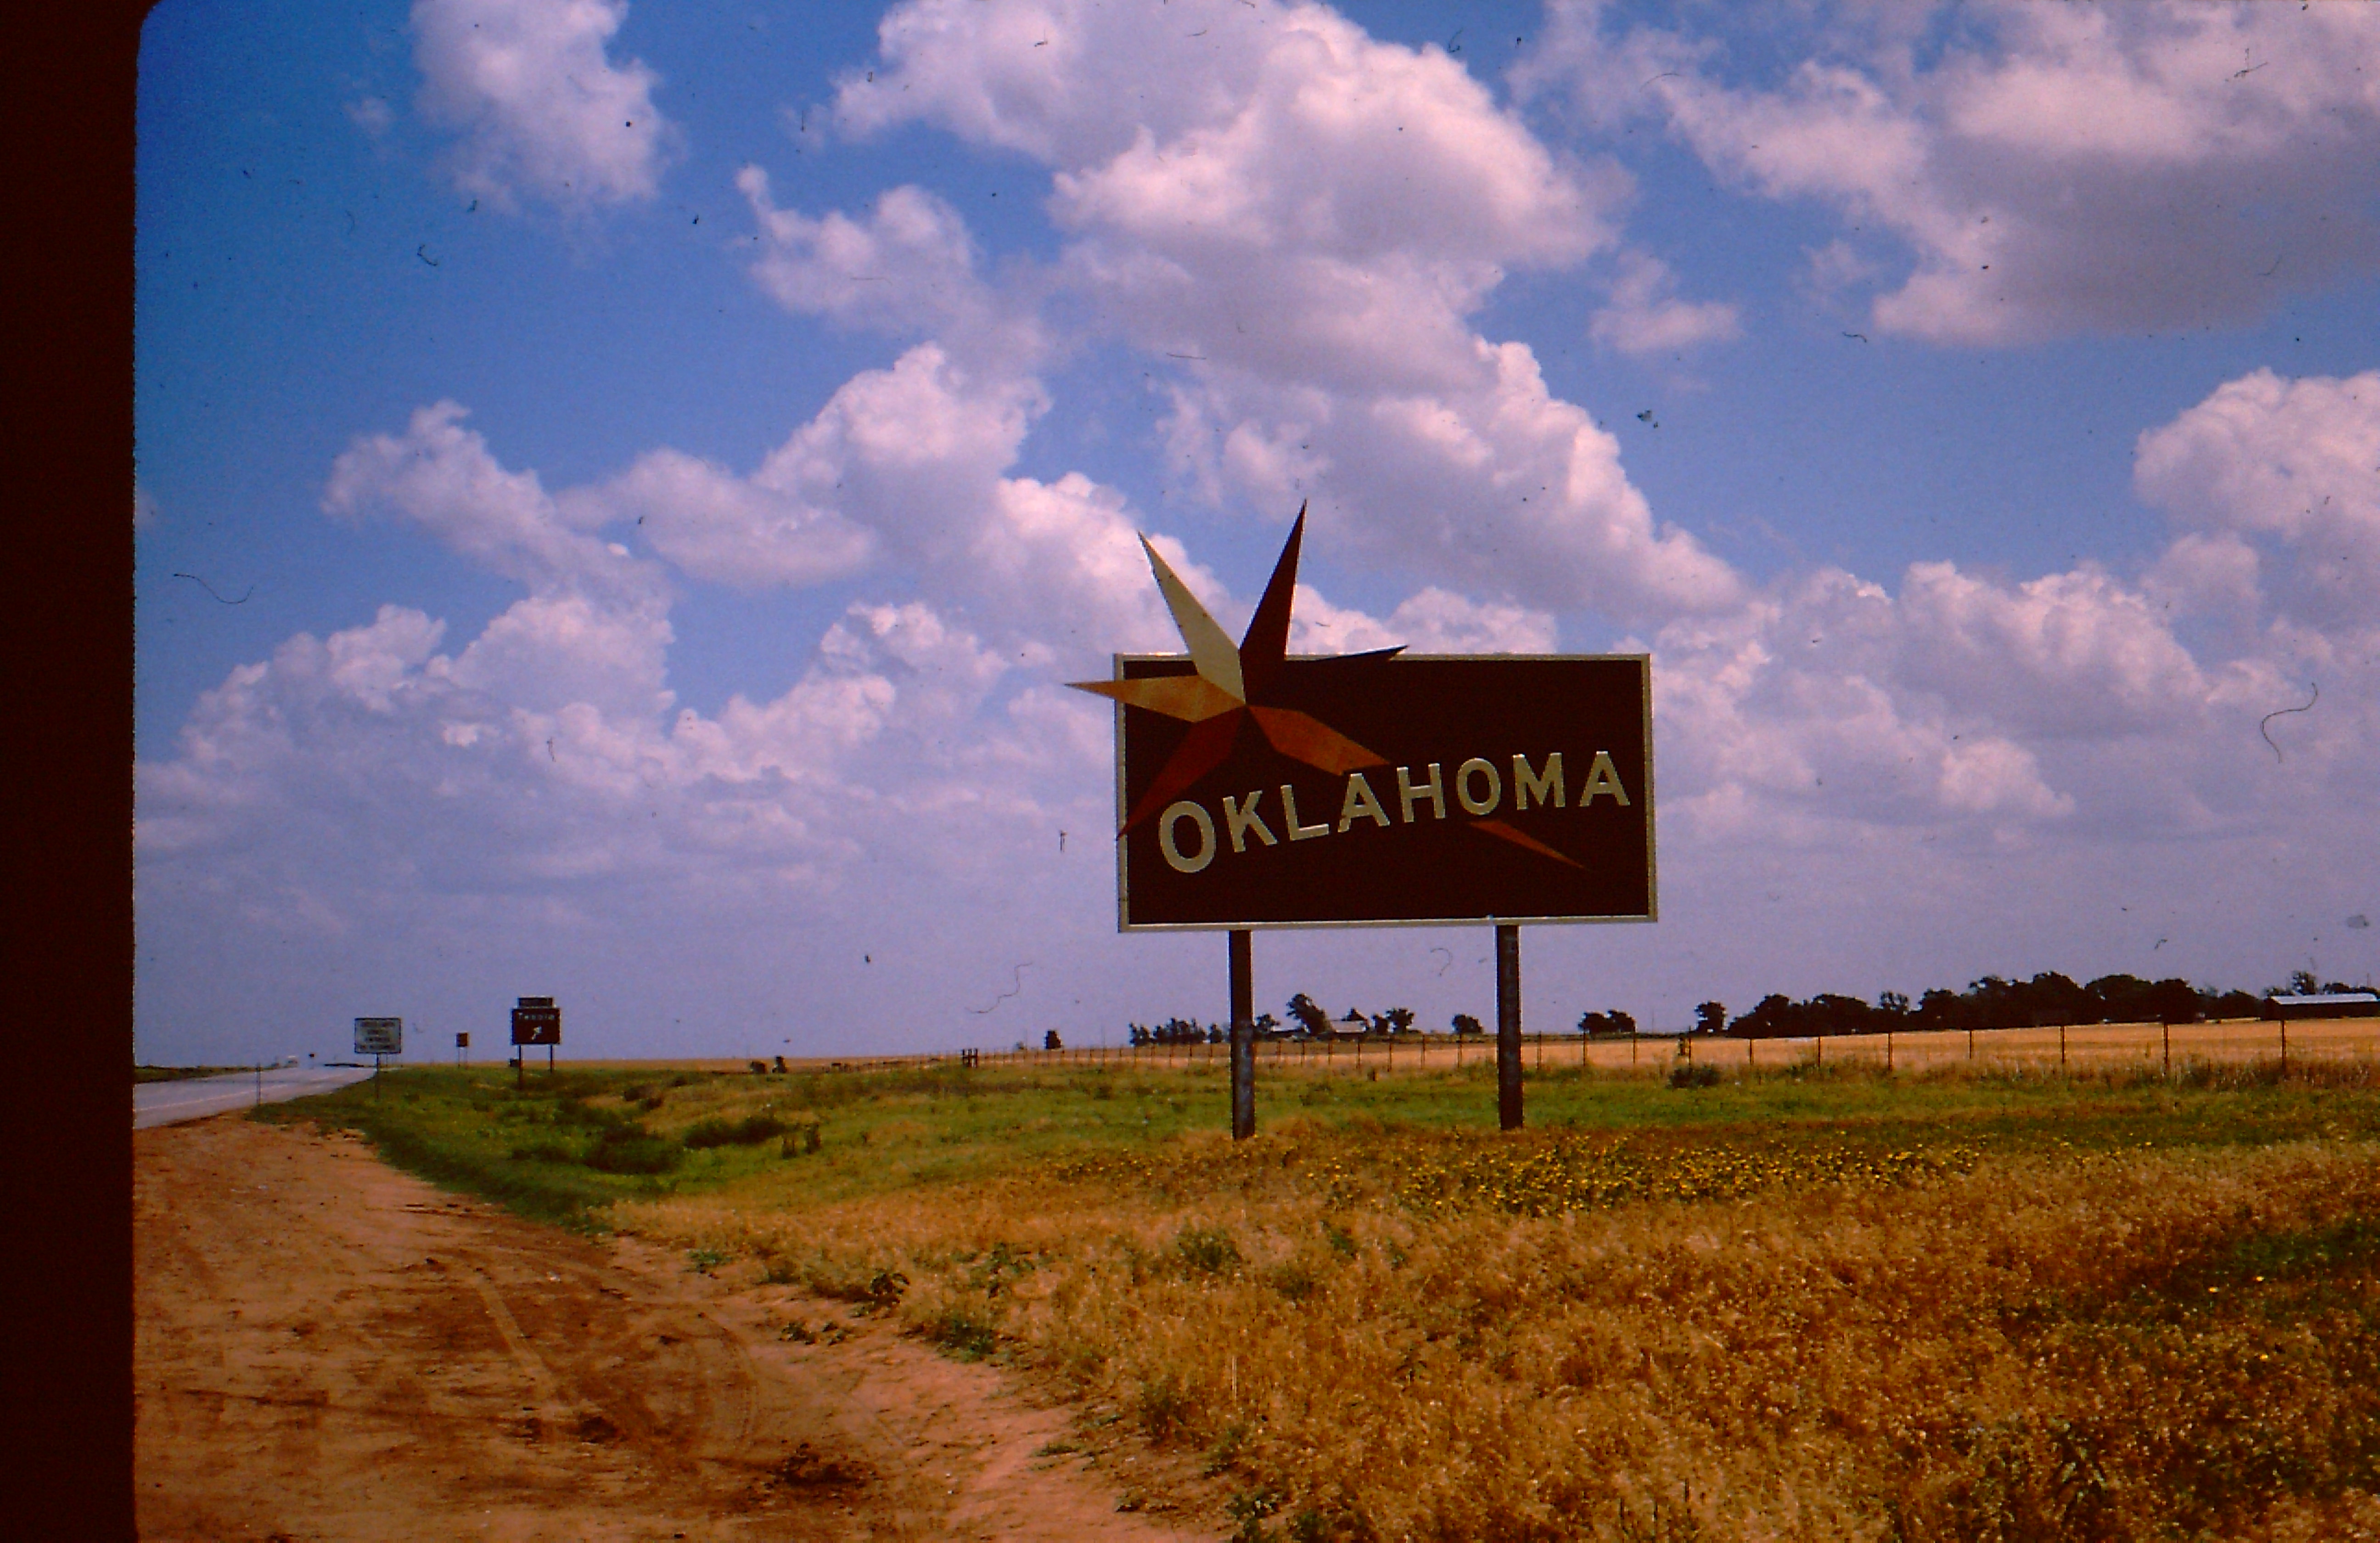 Traveling to Seminar in Oklahoma